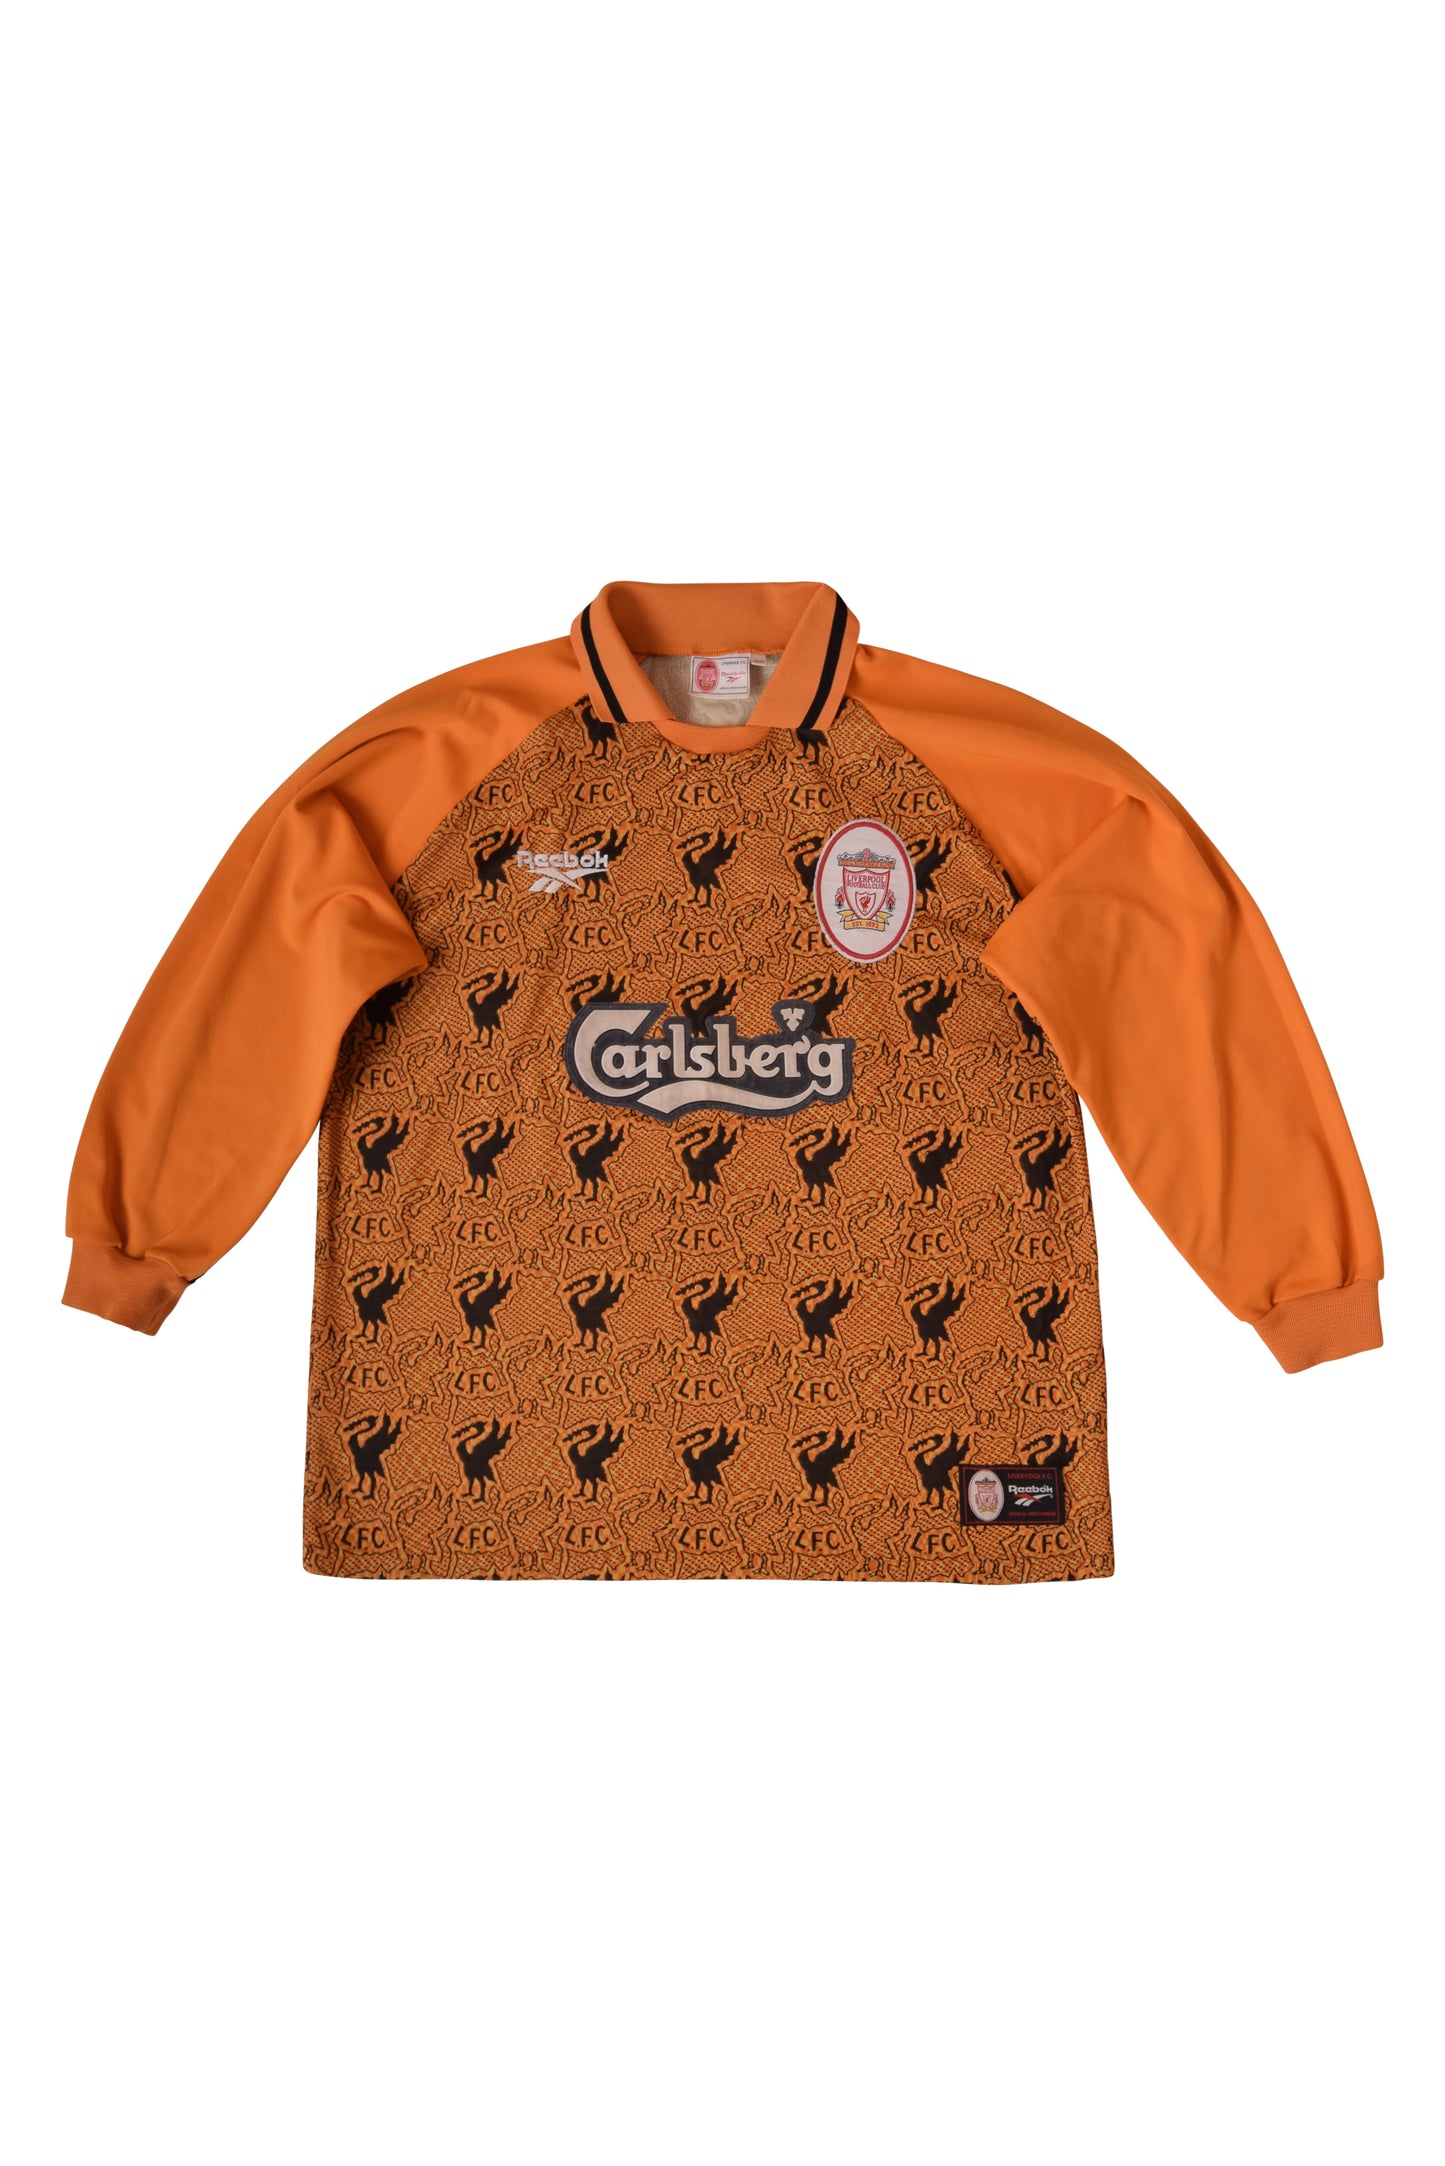 Vintage Liverpool Reebok Goalkeeper 1996 - 1997 Shirt Carlsberg Size XL 42/44 Made in UK